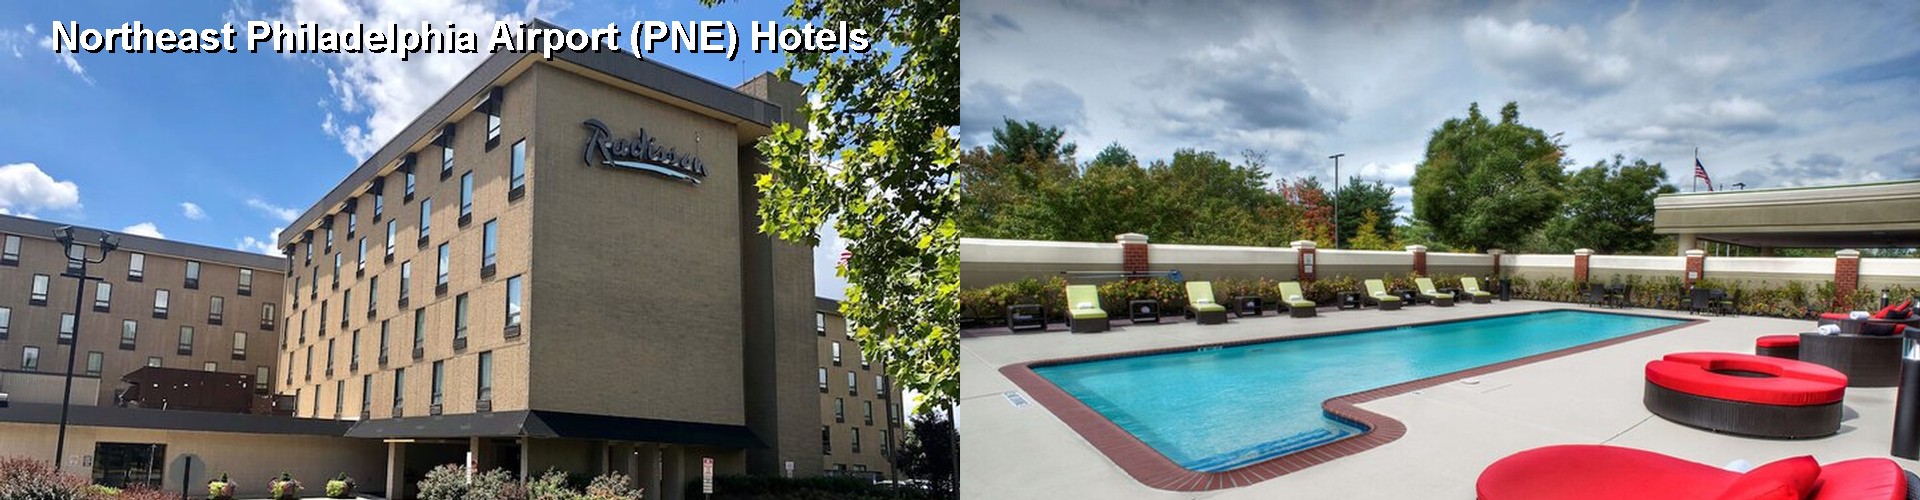 4 Best Hotels near Northeast Philadelphia Airport (PNE)